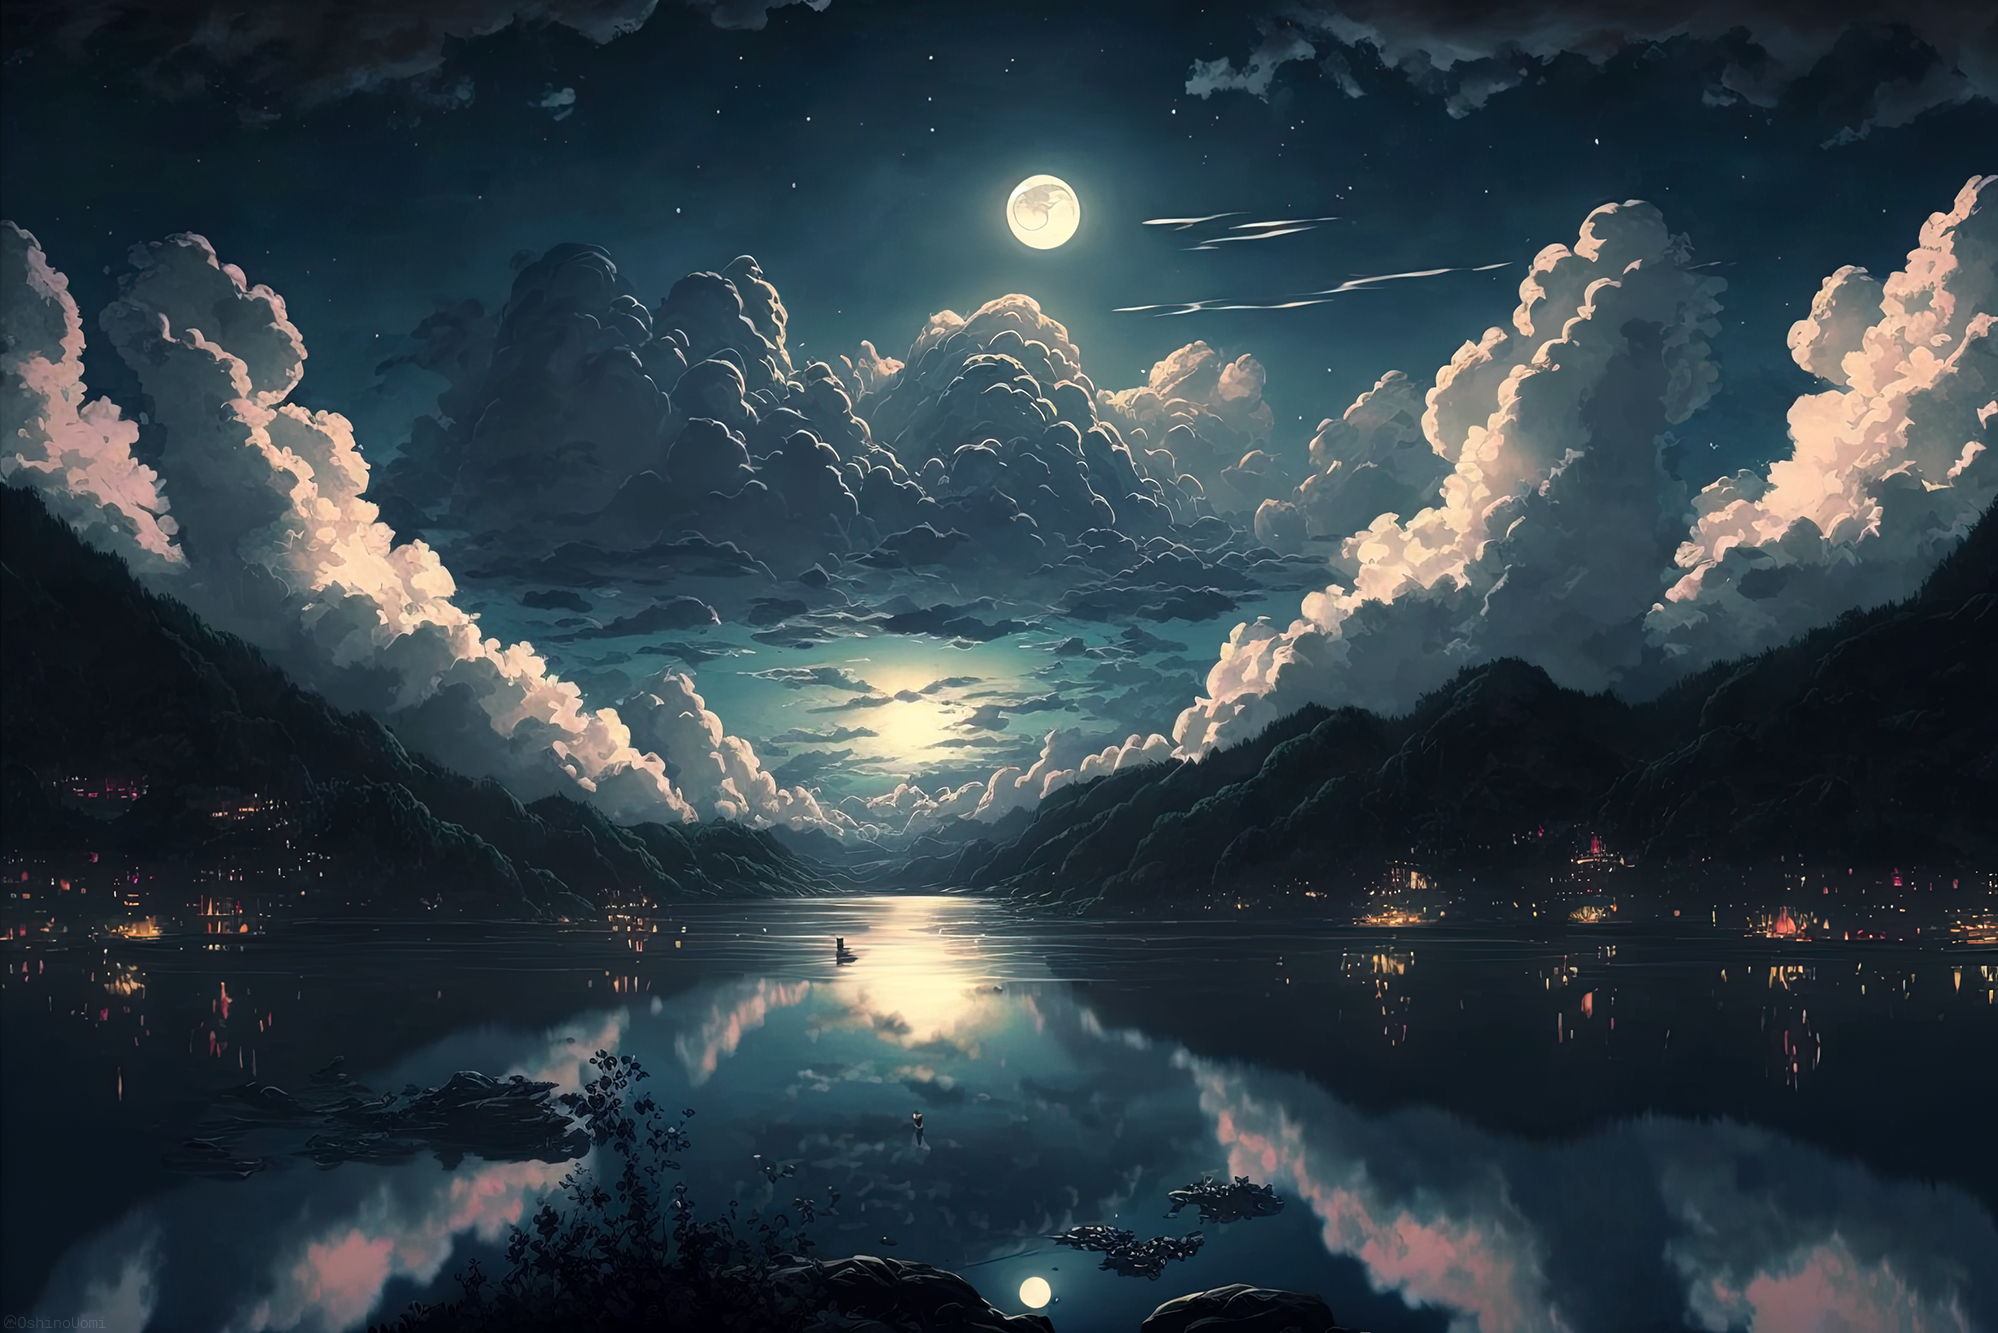 General 1998x1333 illustration AI art landscape Uomi starry night Moon night sky stars reflection water